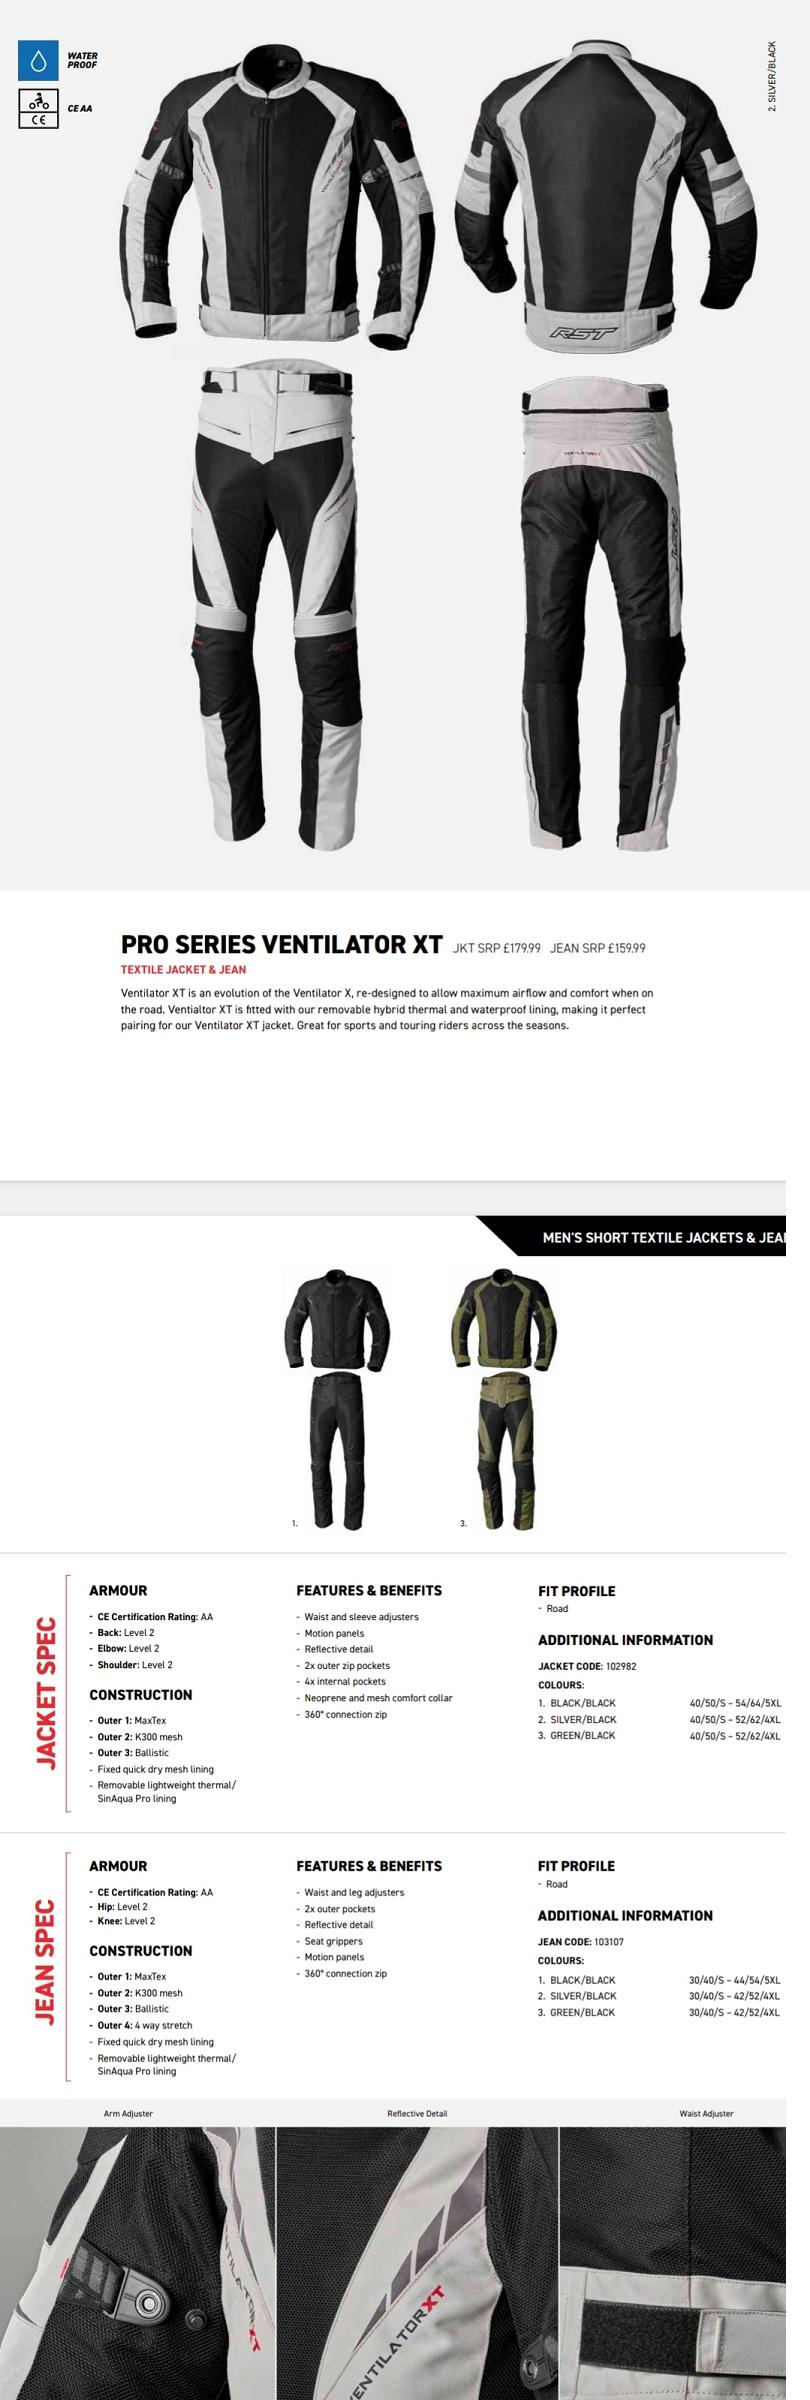 RST Ventilator XT textile jacket and pant